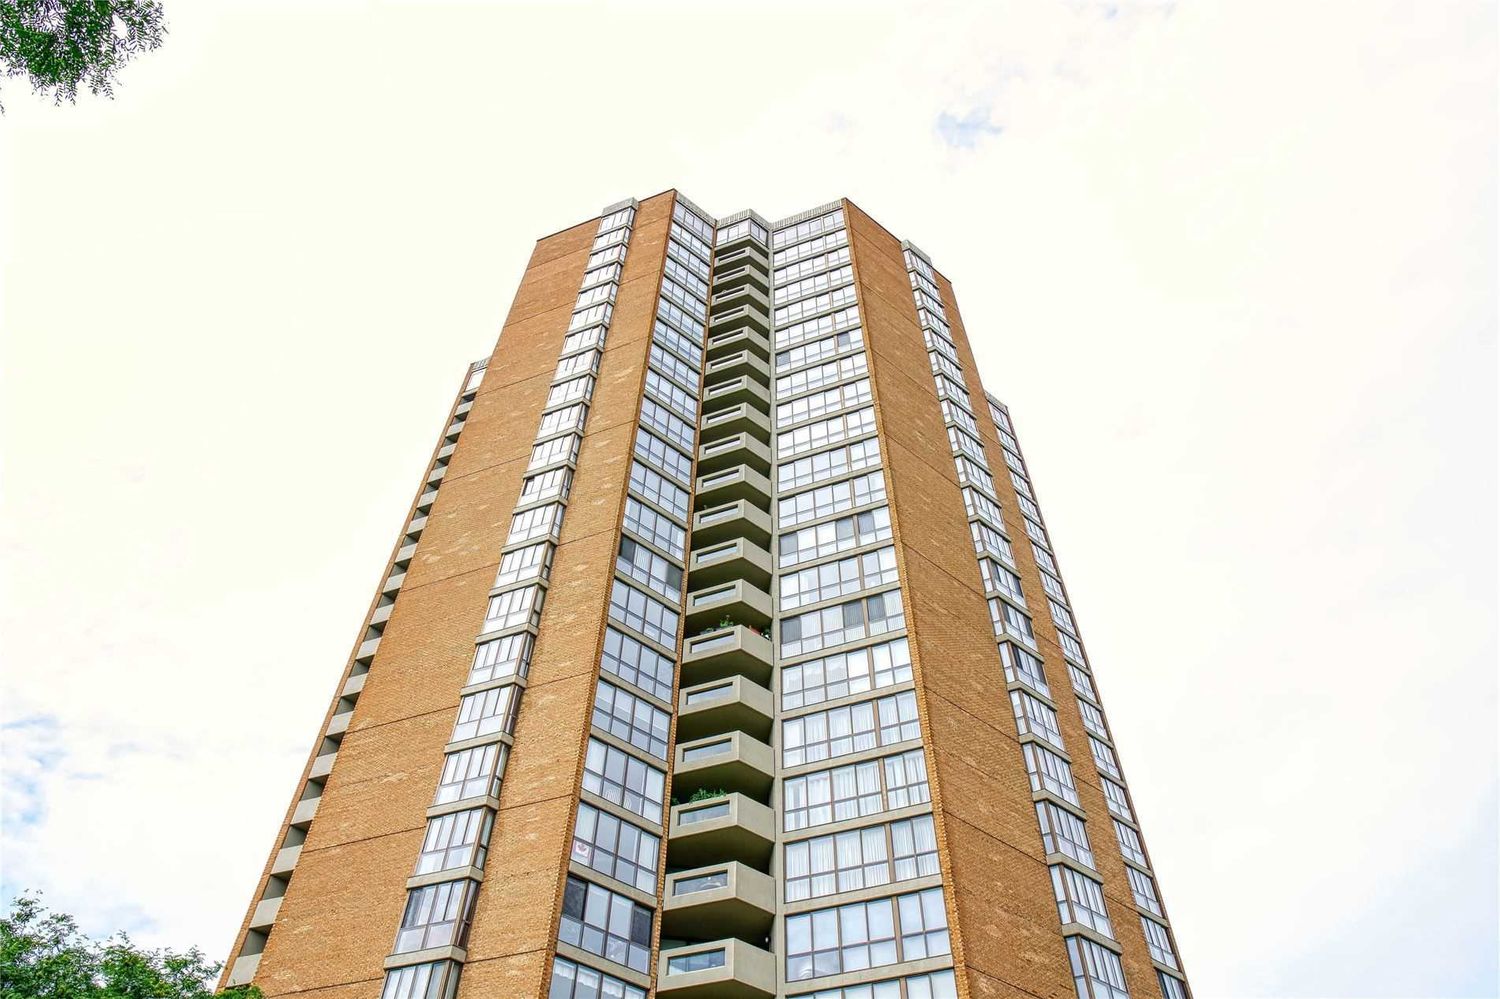 2000 Islington Avenue. Islington 2000 Condos is located in  Etobicoke, Toronto - image #2 of 3